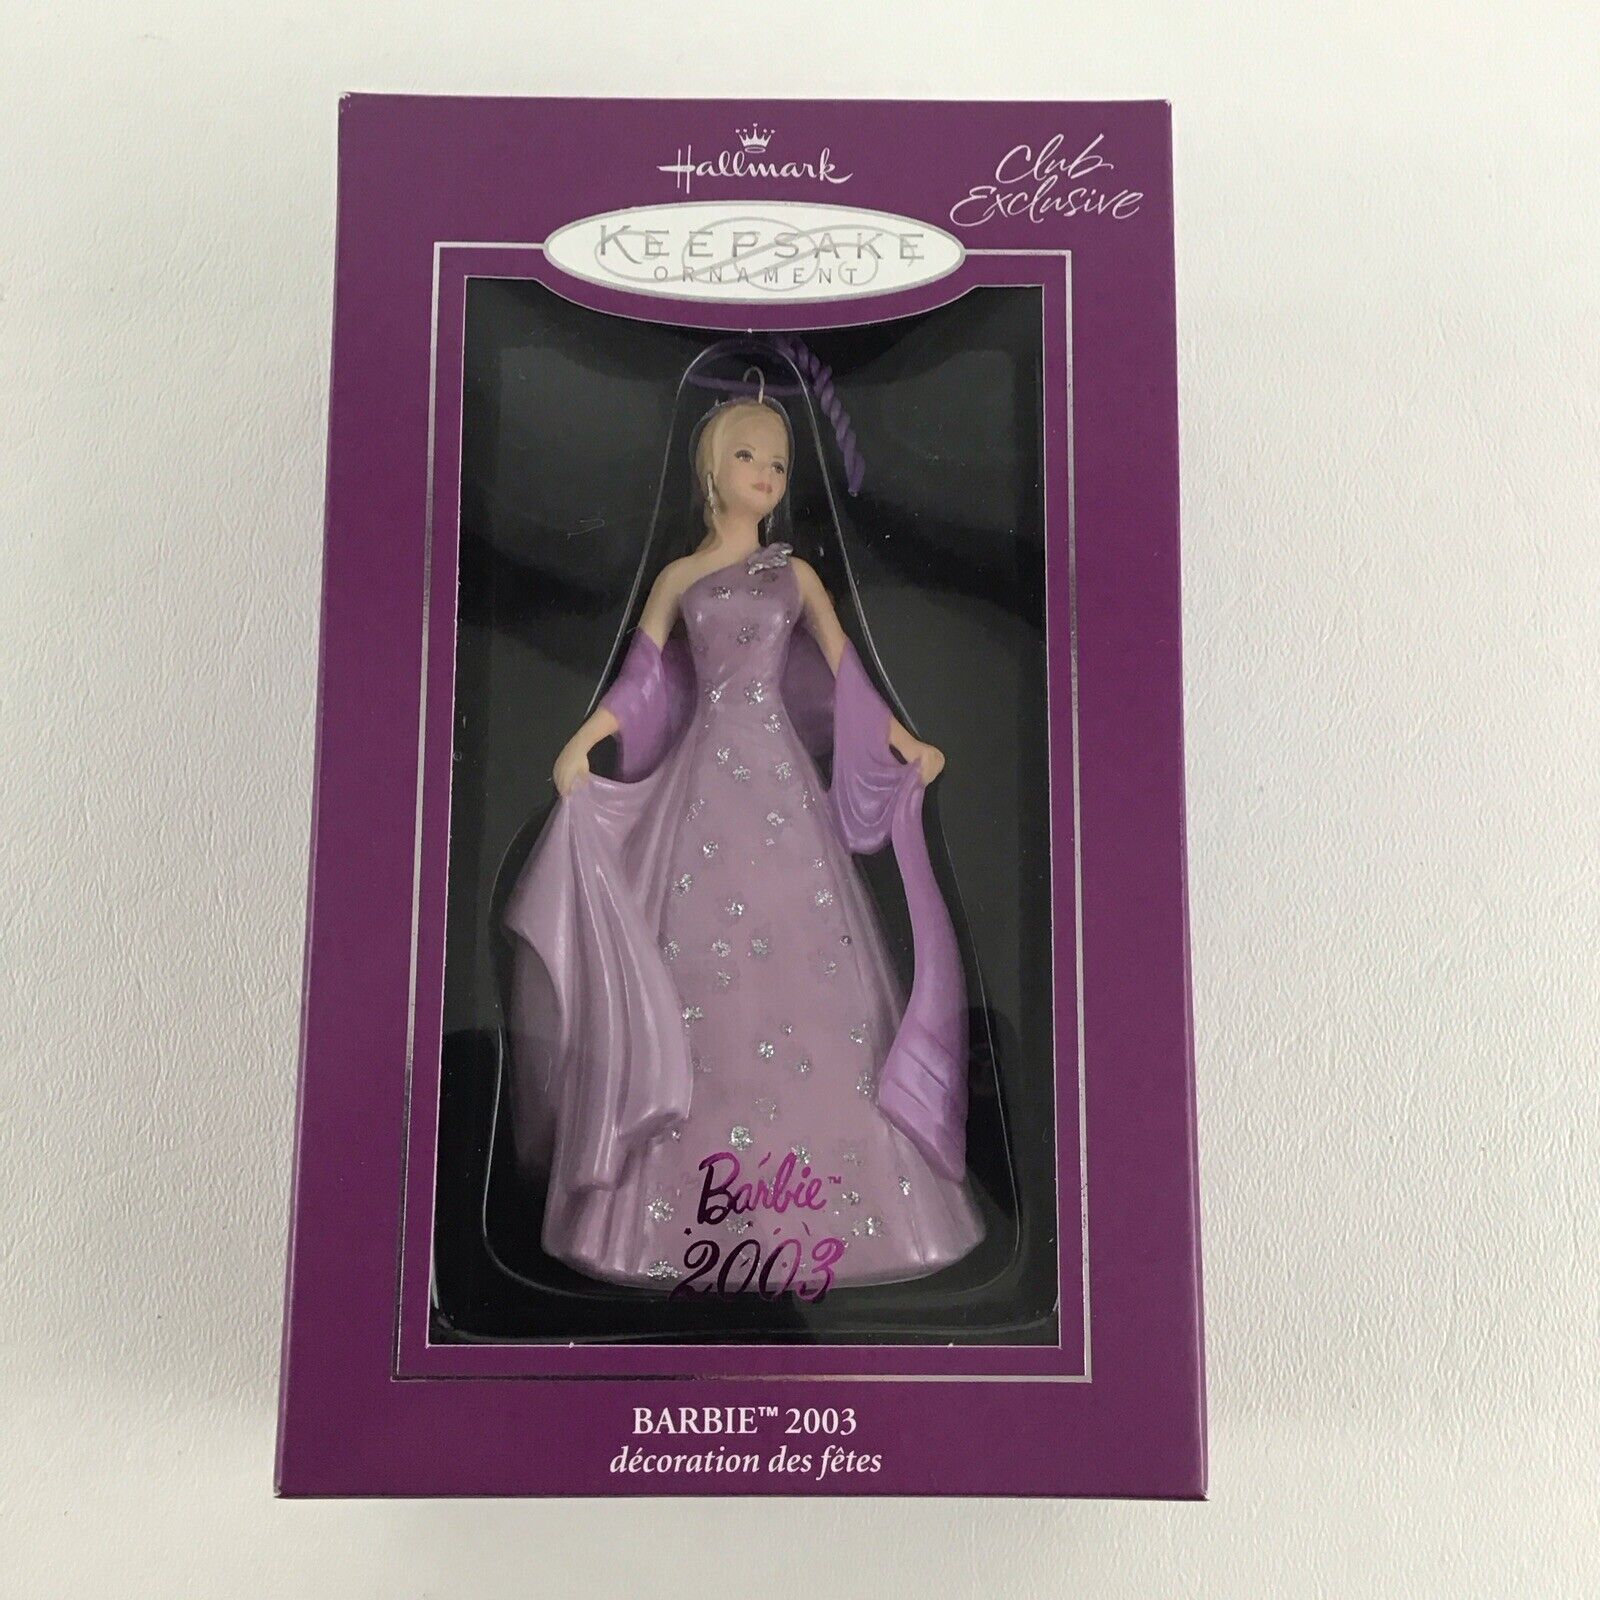 Hallmark Barbie Ornament 2003 Lavender Version Collector's Club Exclusive NEW